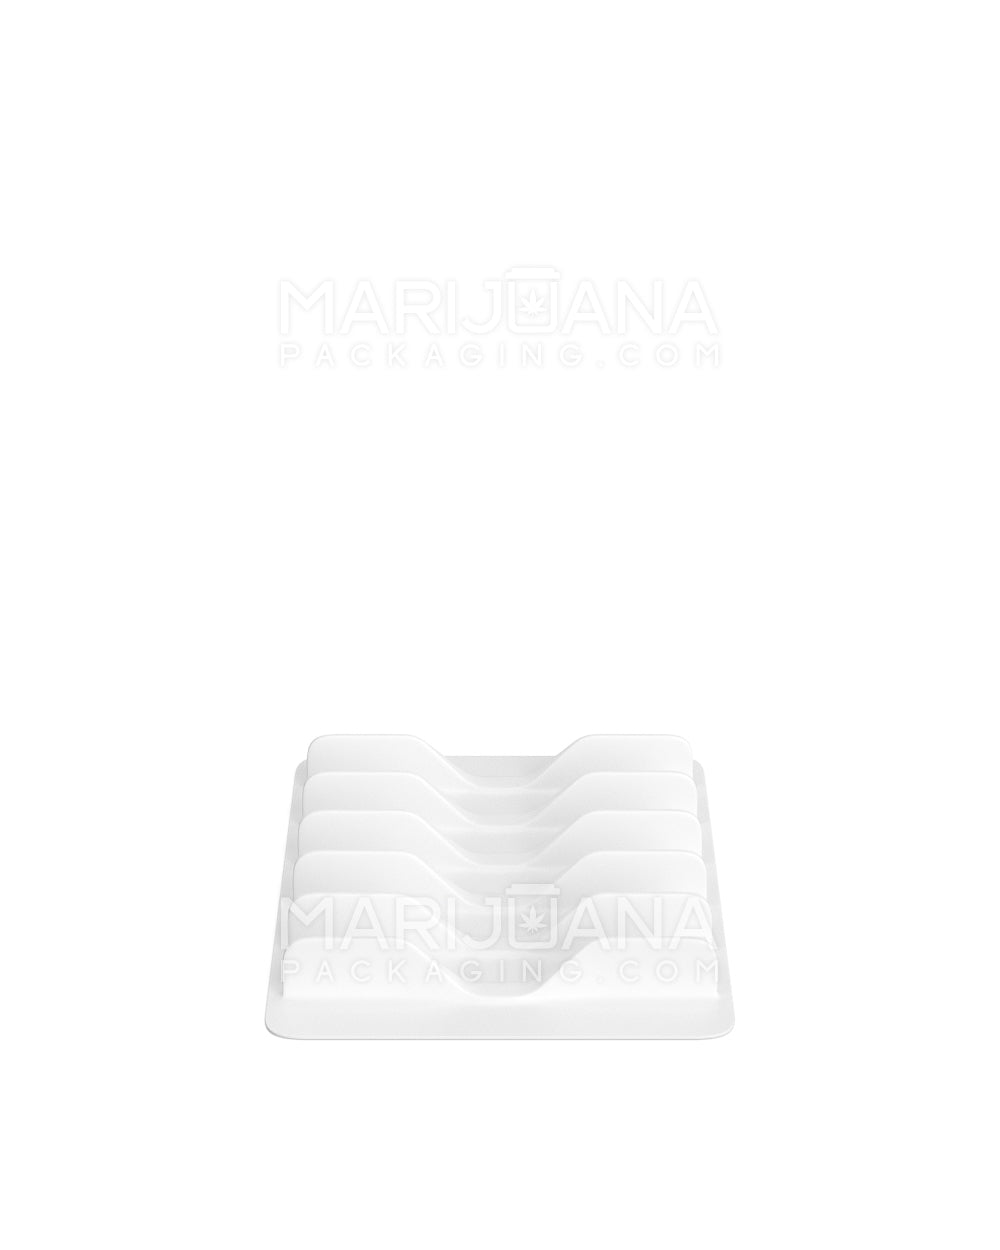 POLLEN GEAR | SnapTech Medium White Plastic Insert Tray | 25mm - Foam - 2000 Count - 2